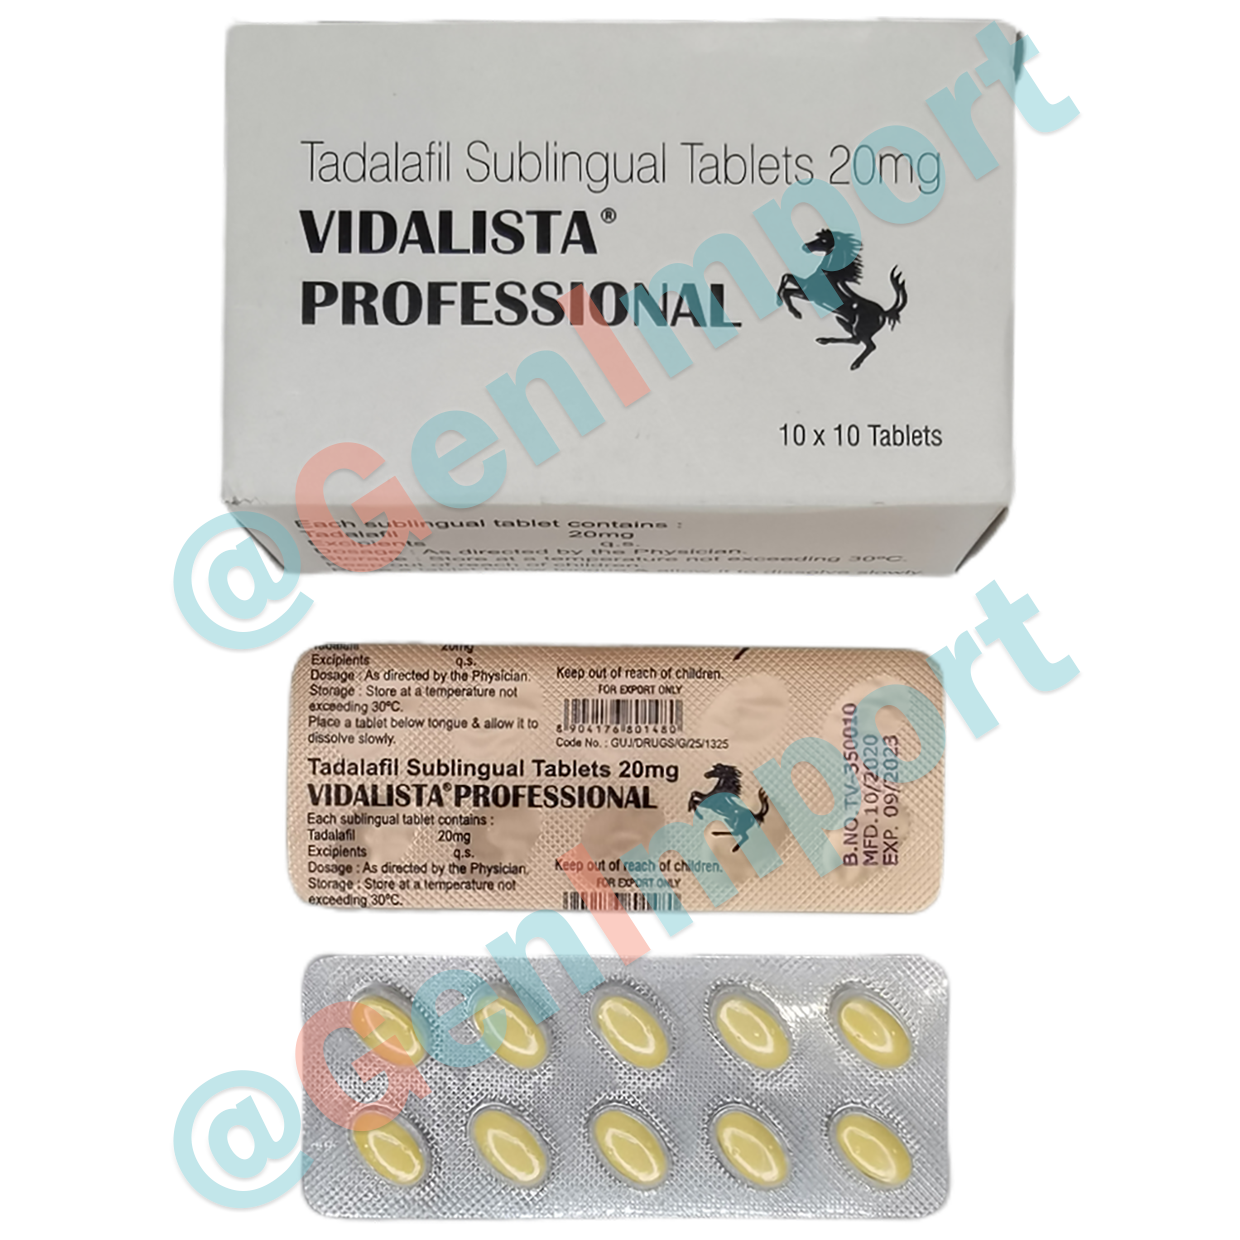 Vidalista Professional Видалиста Профессионал 20, аналог сиалиса (тадалафил, tadalafil)